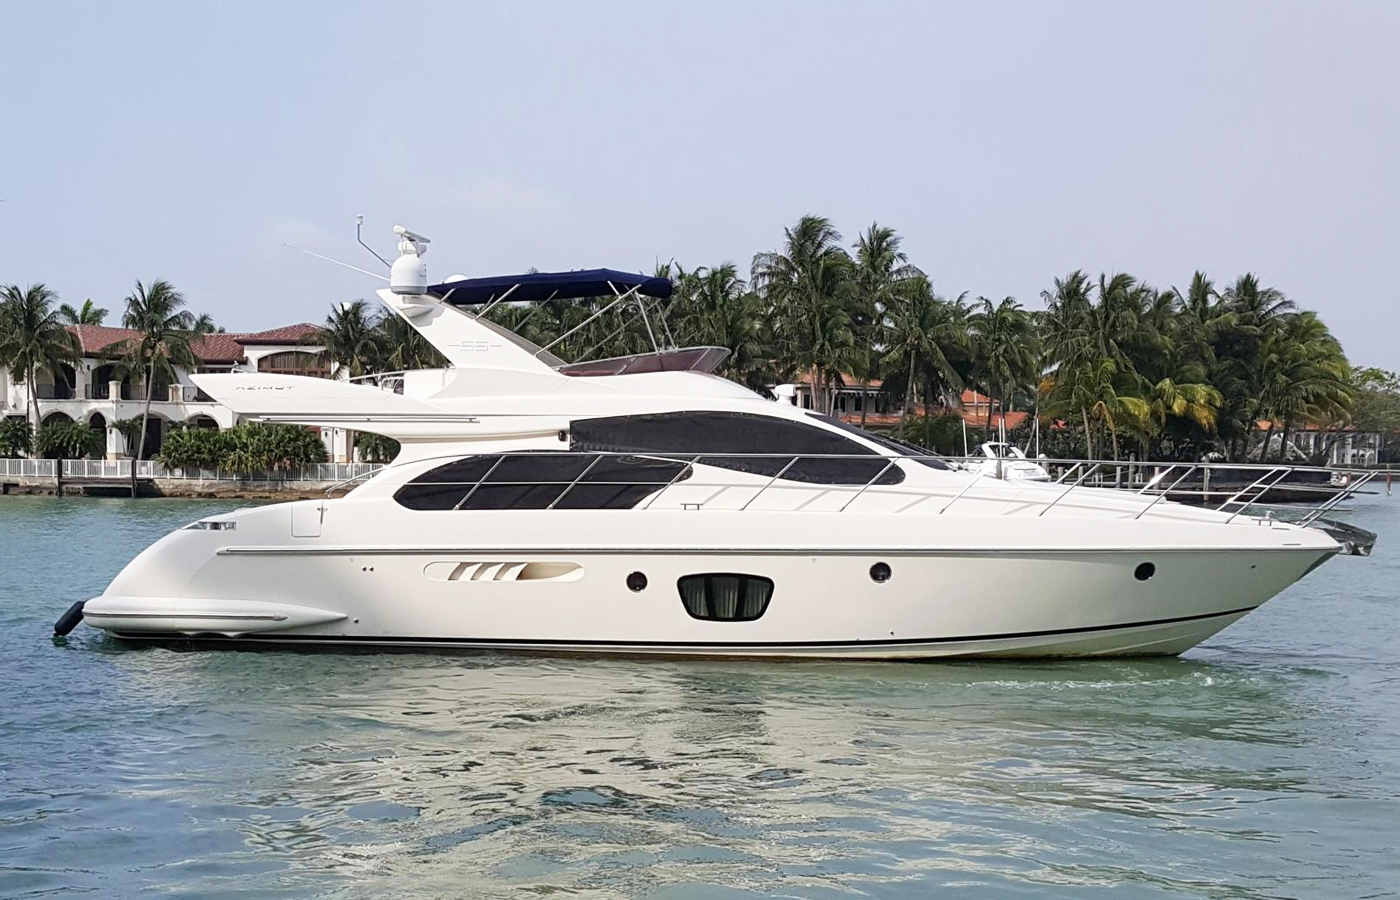 55 Azimut Motoryacht Sold By Yacht Broker Blake Nichol